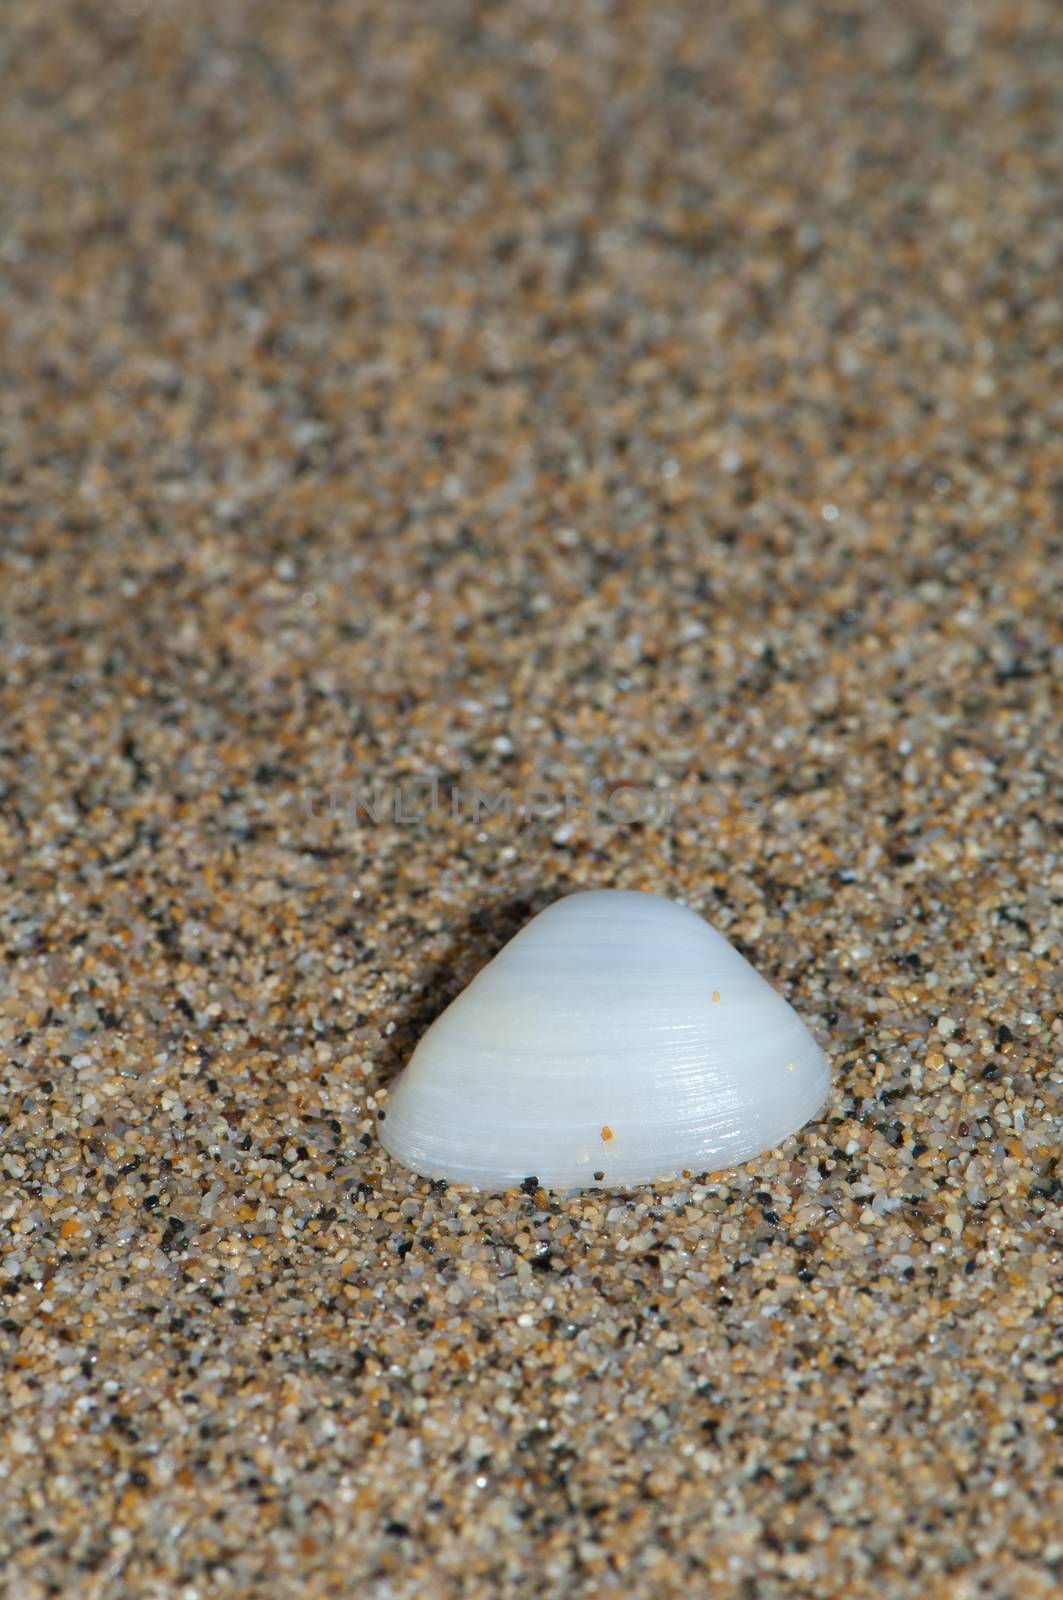 Shell of bivalve wash up on shore. by VictorSuarez